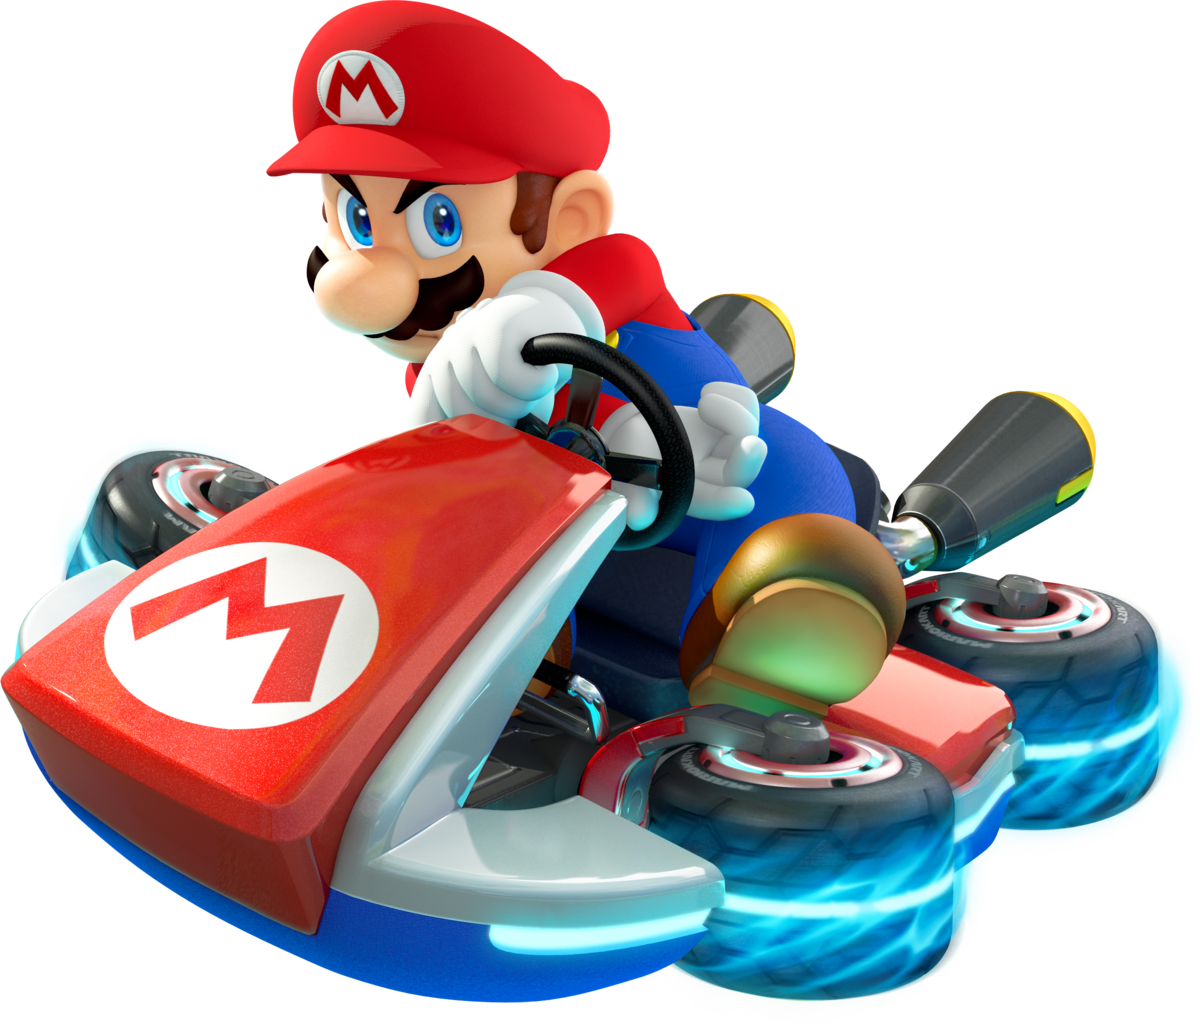 Mario From Mario Kart